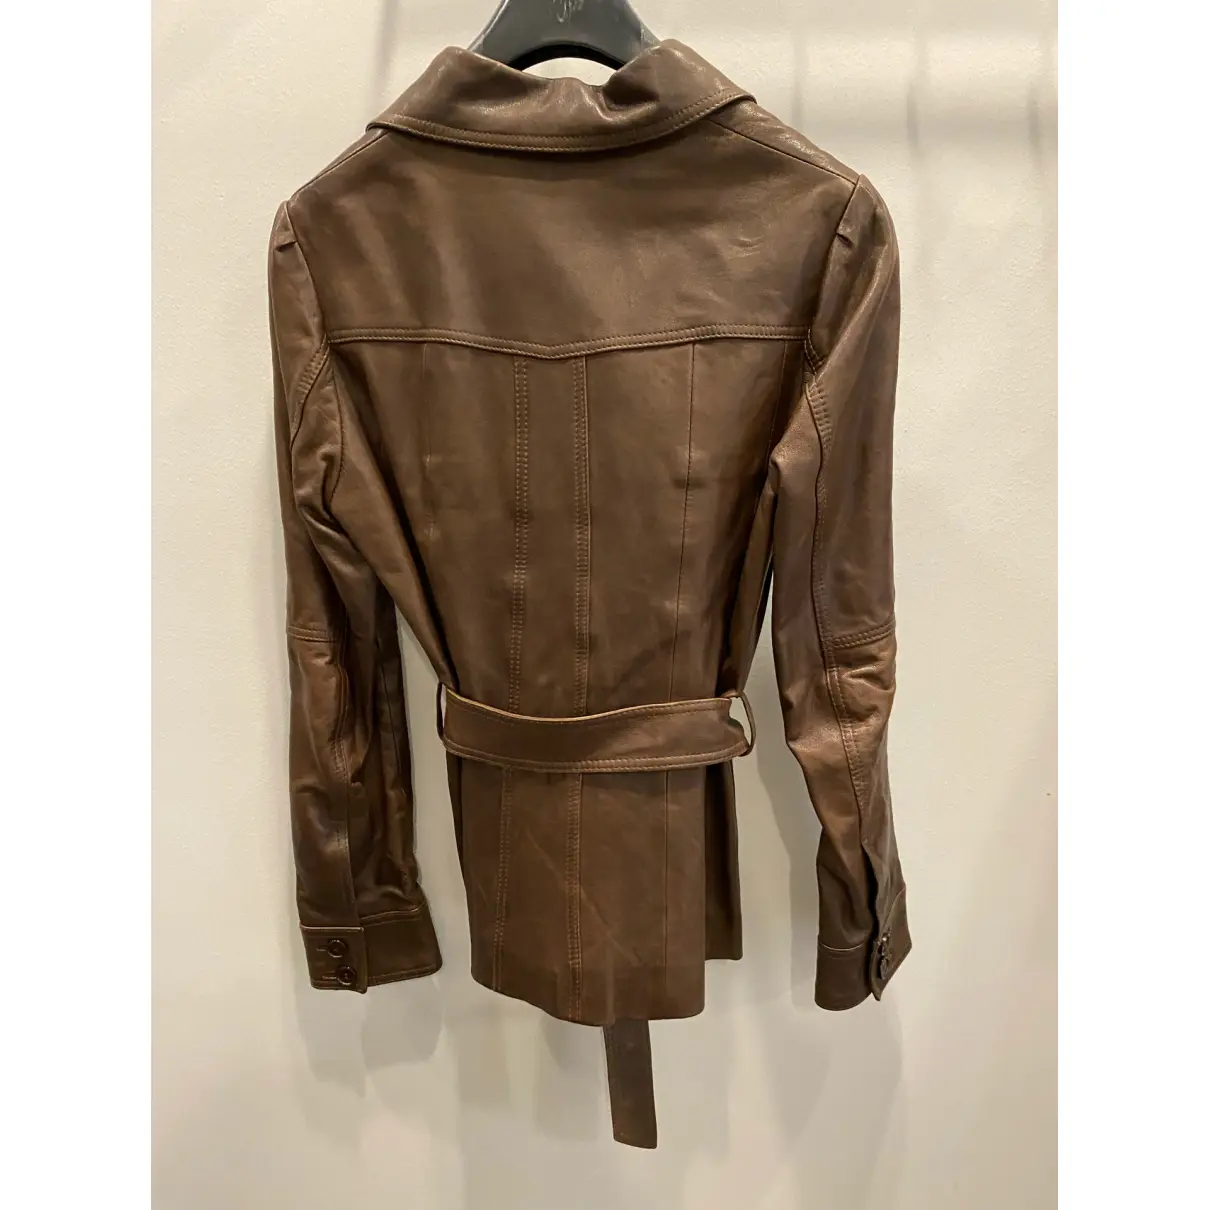 Buy Gant Leather jacket online